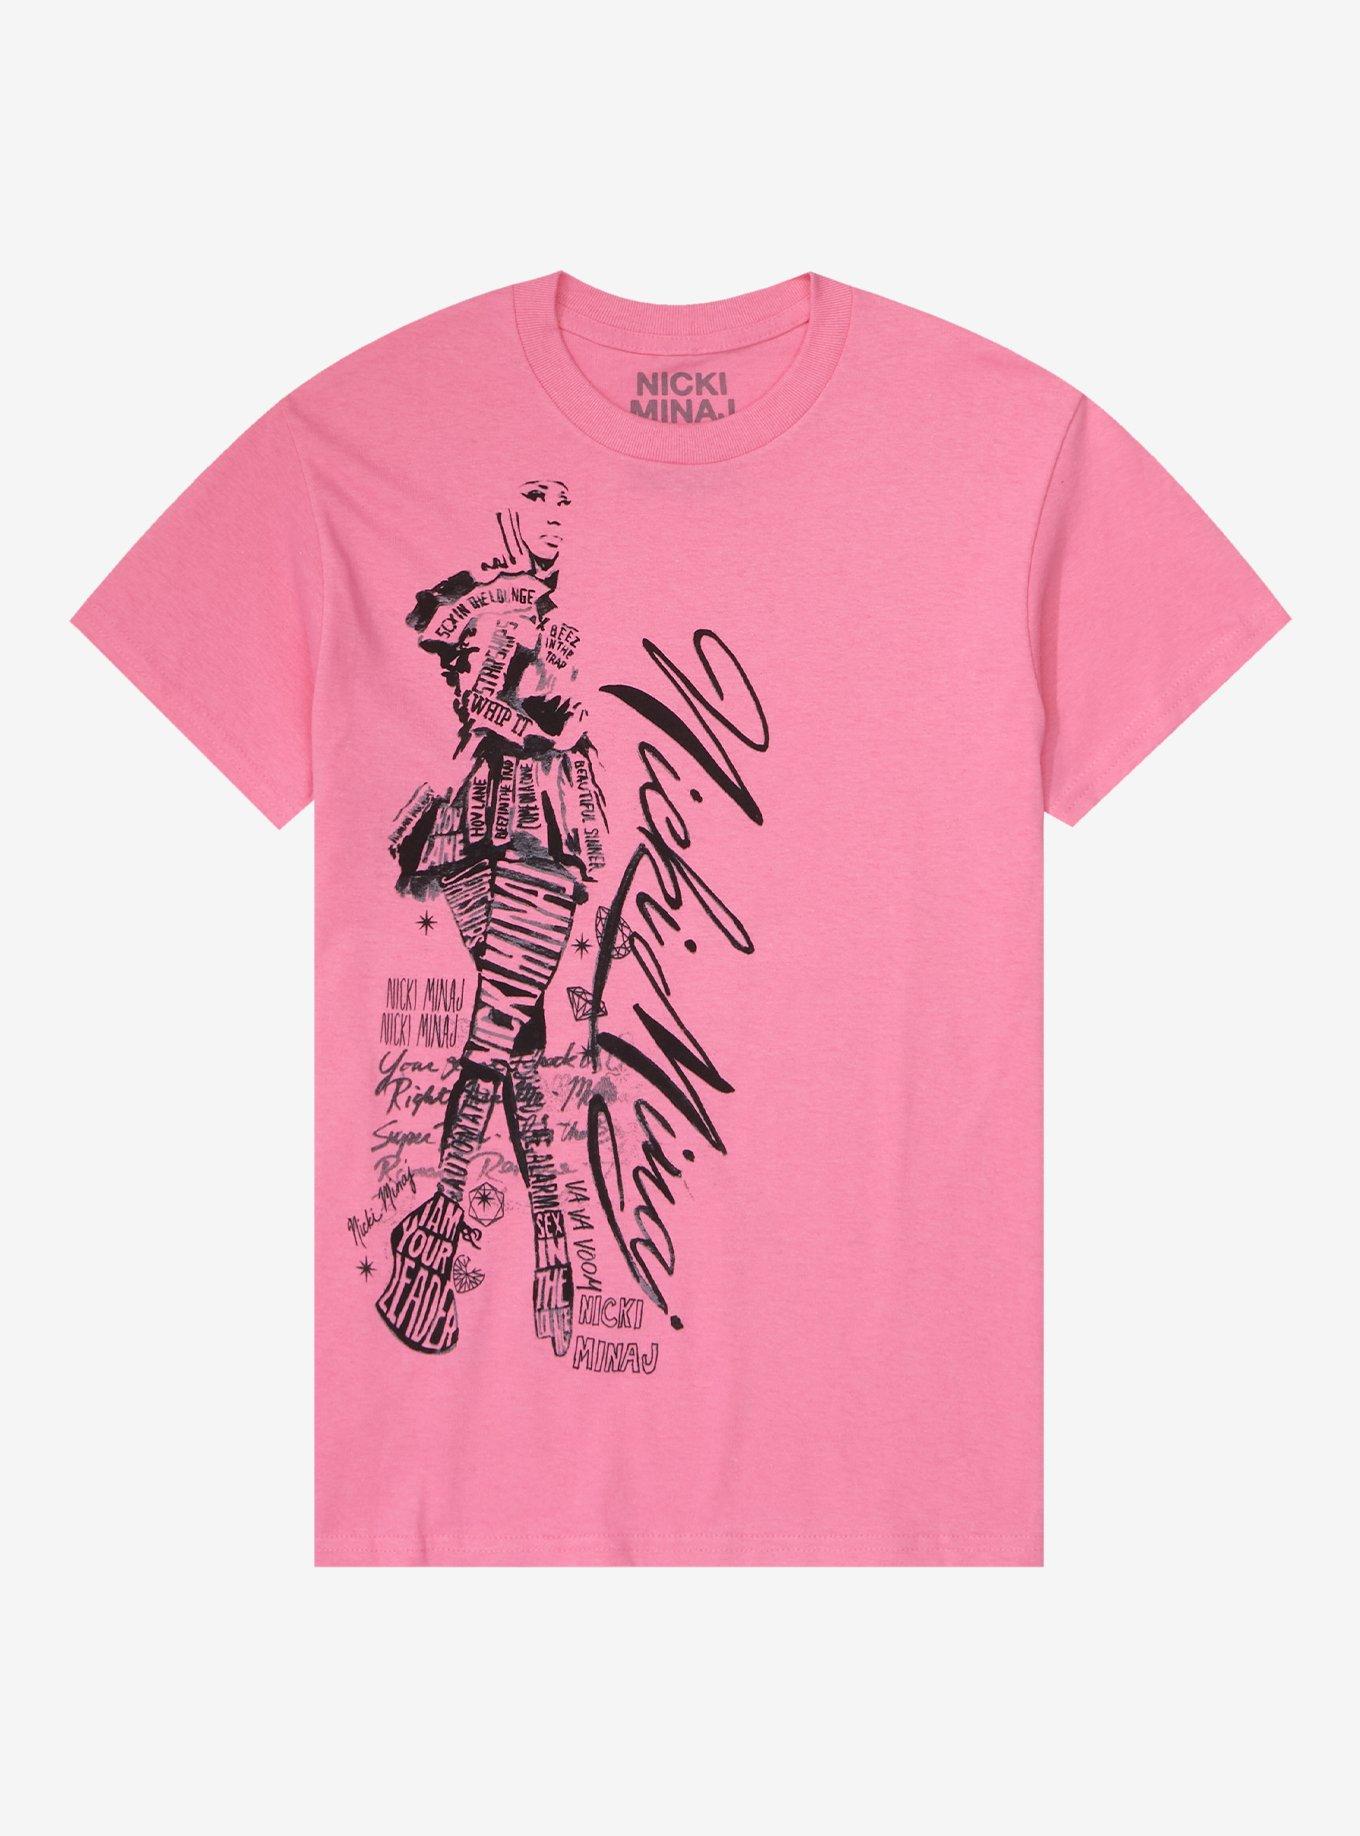 Nicki Minaj Sketch Boyfriend Fit Girls T-Shirt, PINK, hi-res